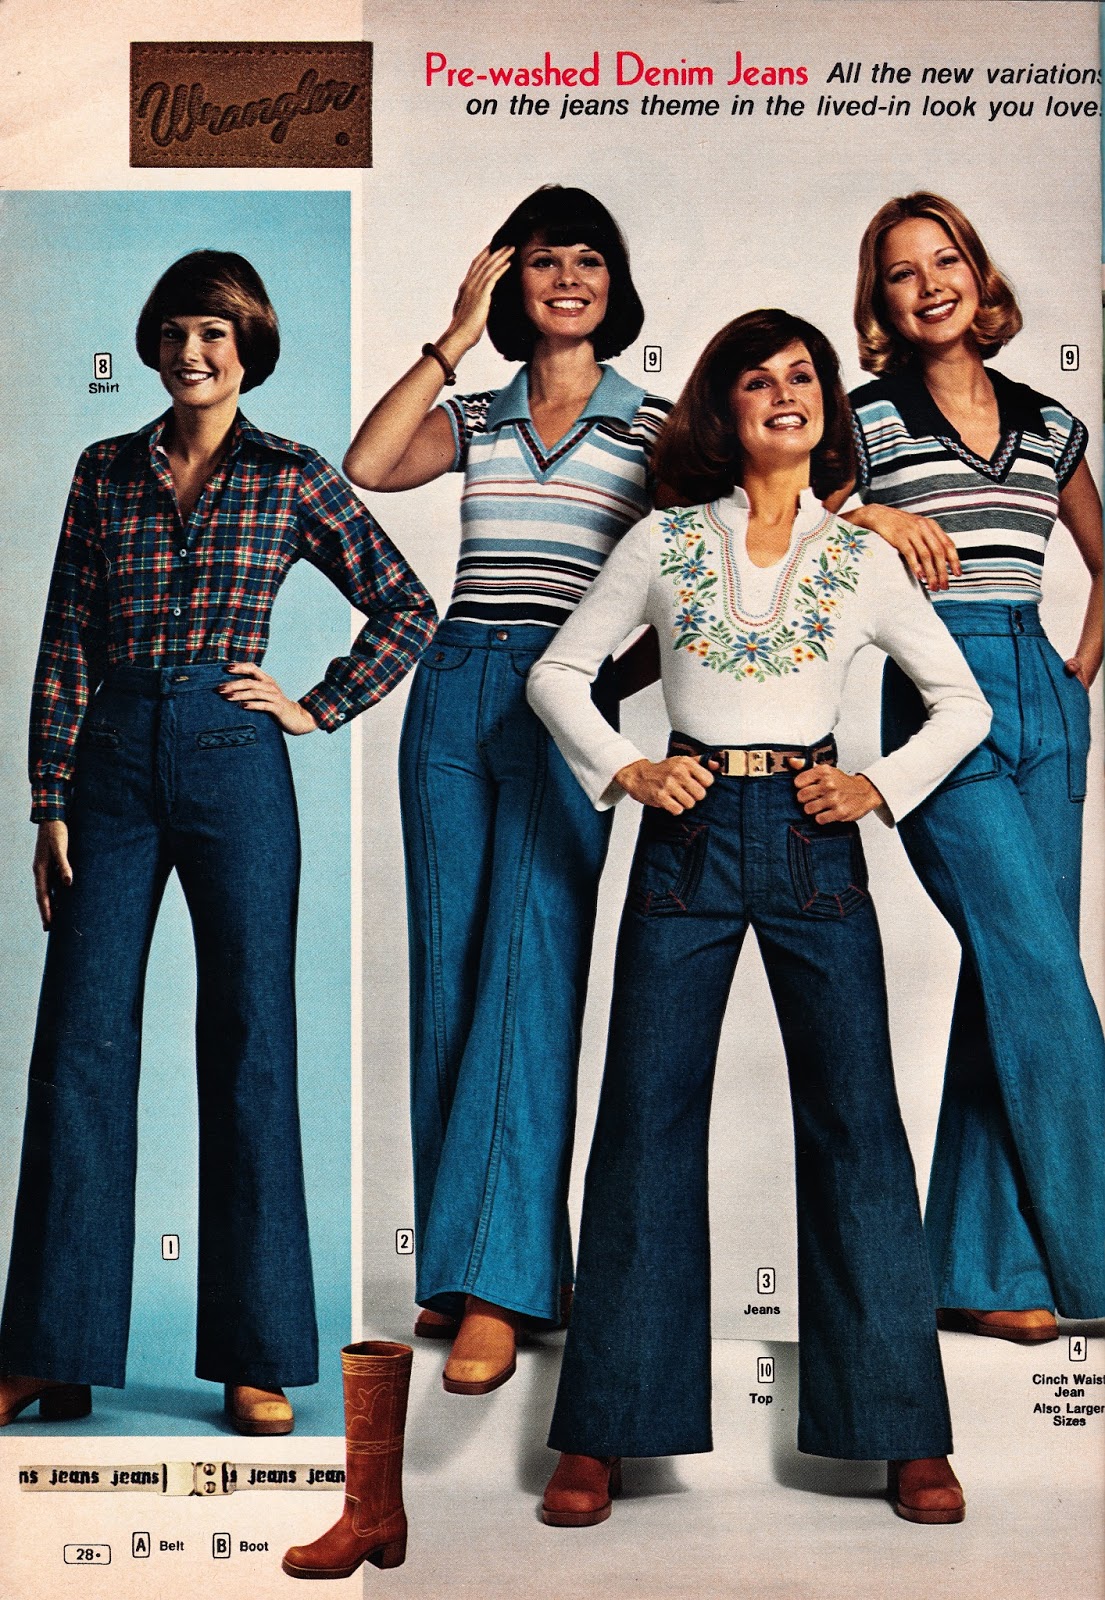 Kathy Loghry Blogspot: That's So 70s: Deminy Daze - Part 3!